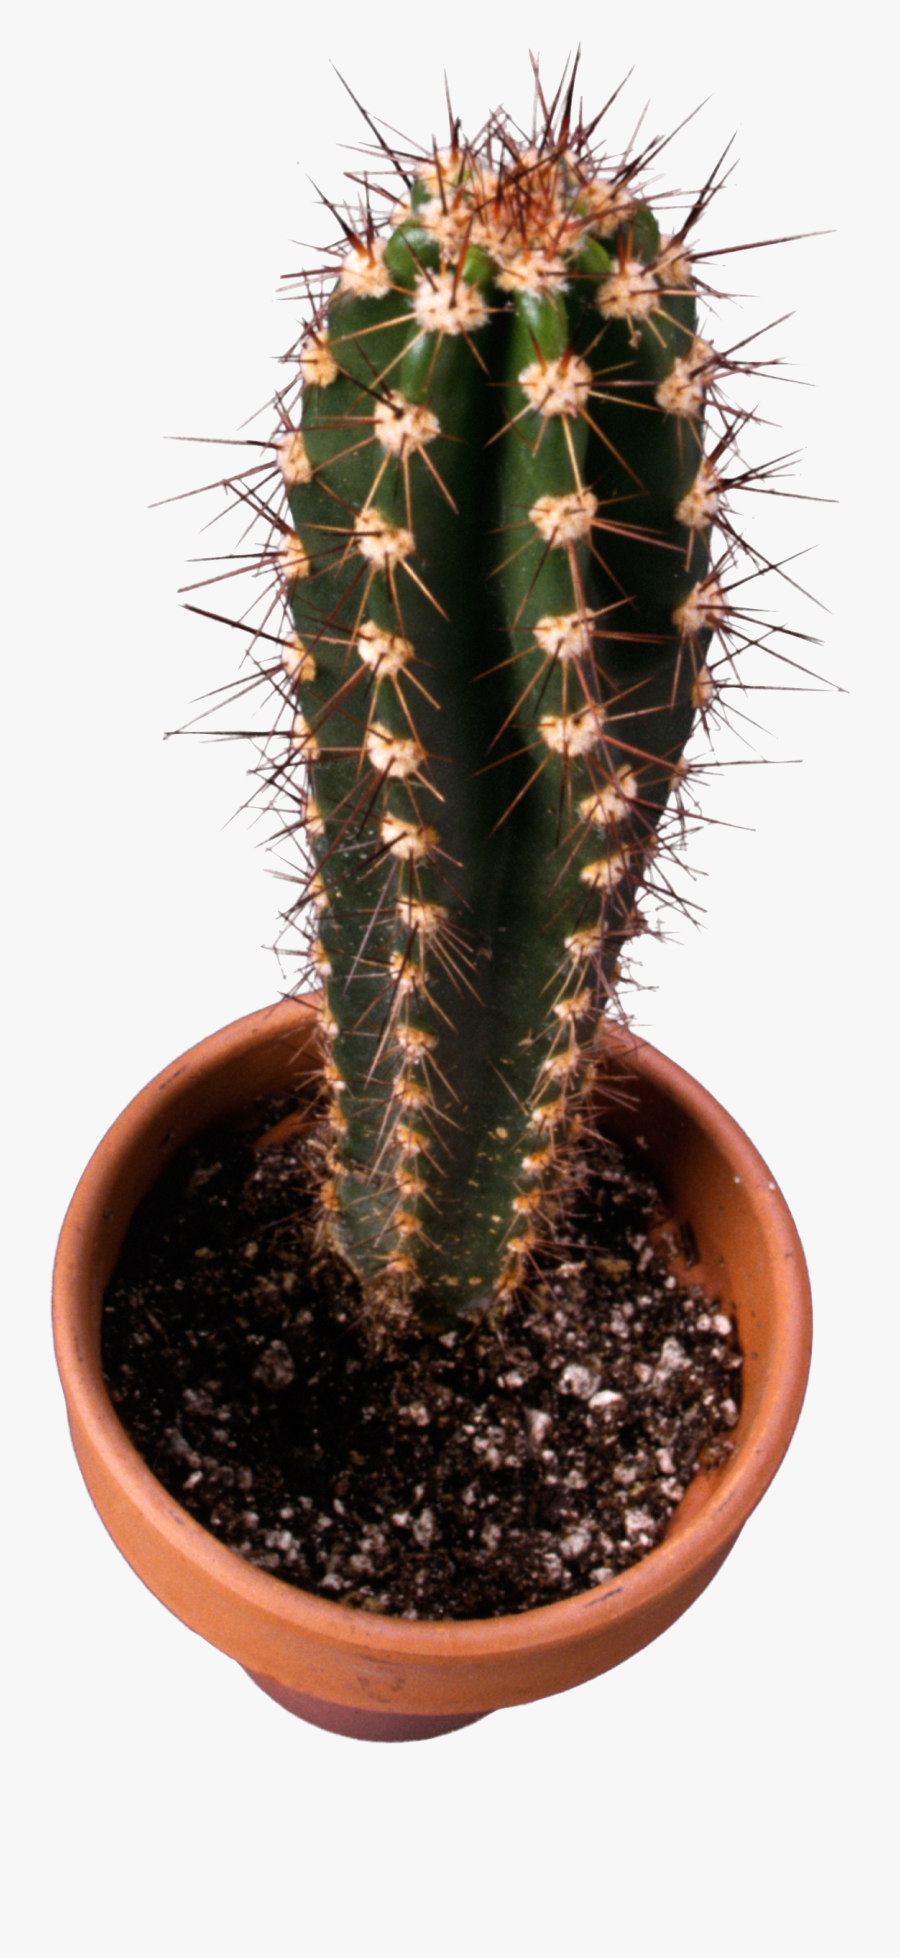 Cactus Png Image - Cactus Top View, Transparent Clipart